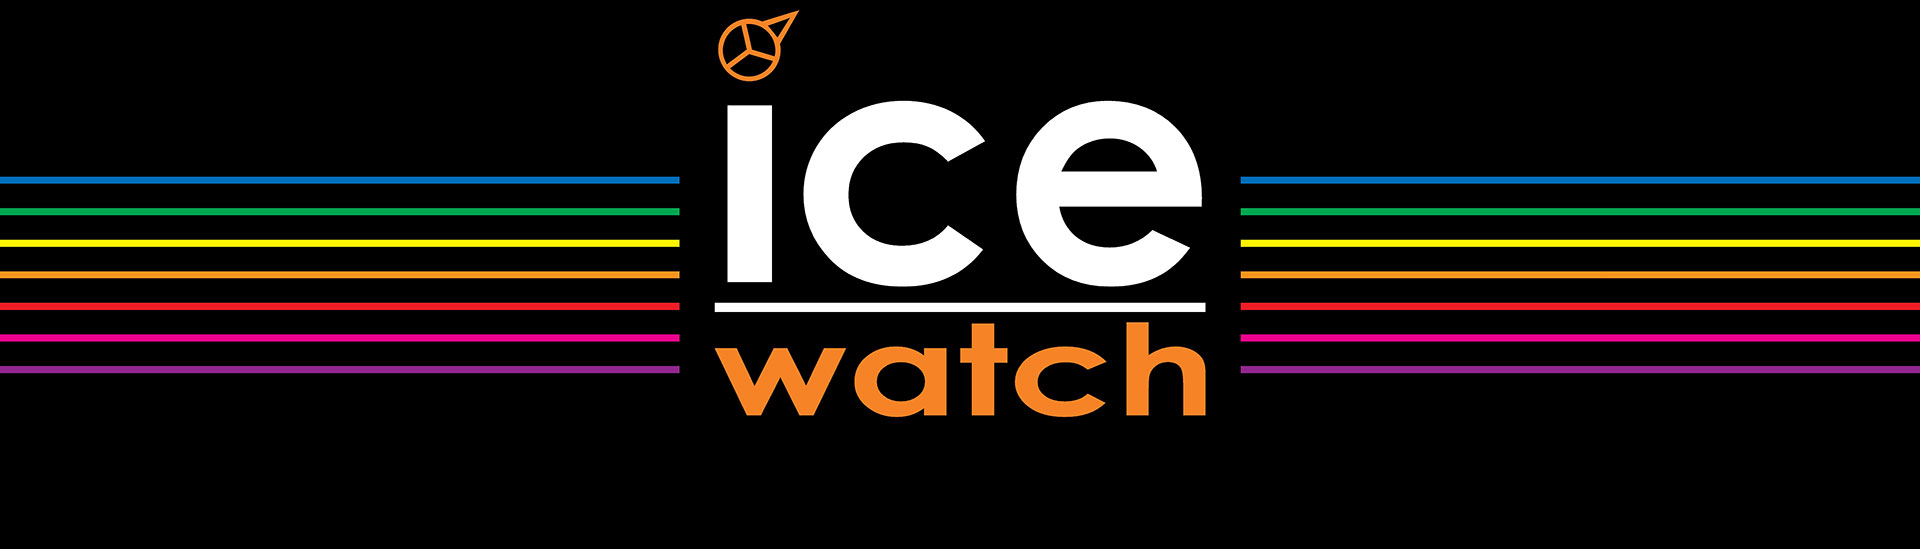 Ice Watches